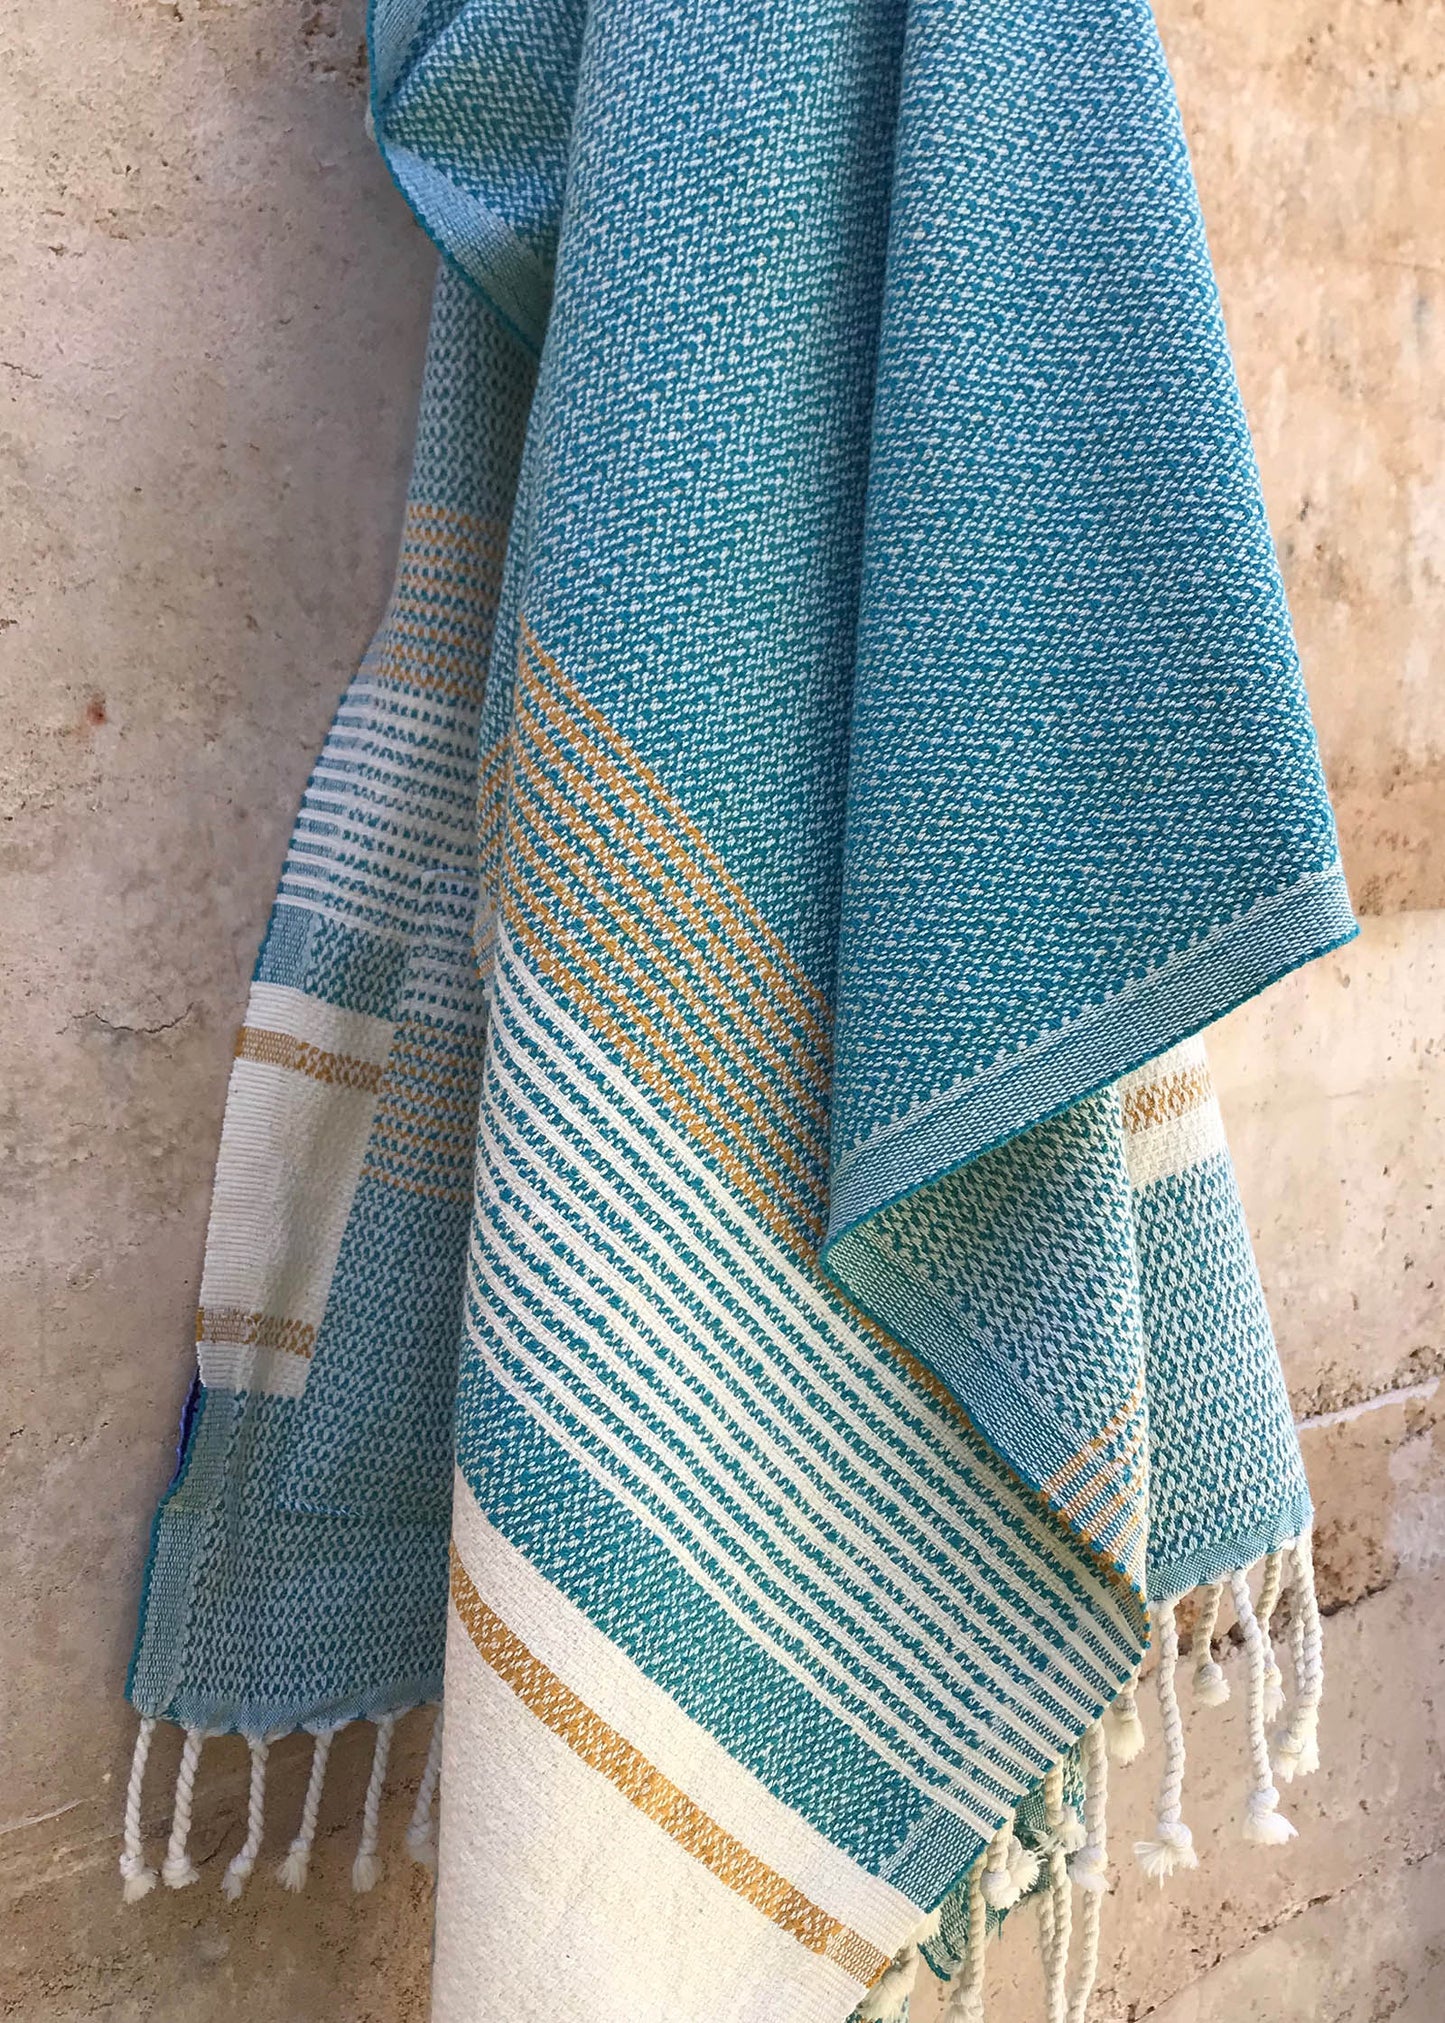 Freostyle sustainable turkish towel with pocket, Thalassa, hung